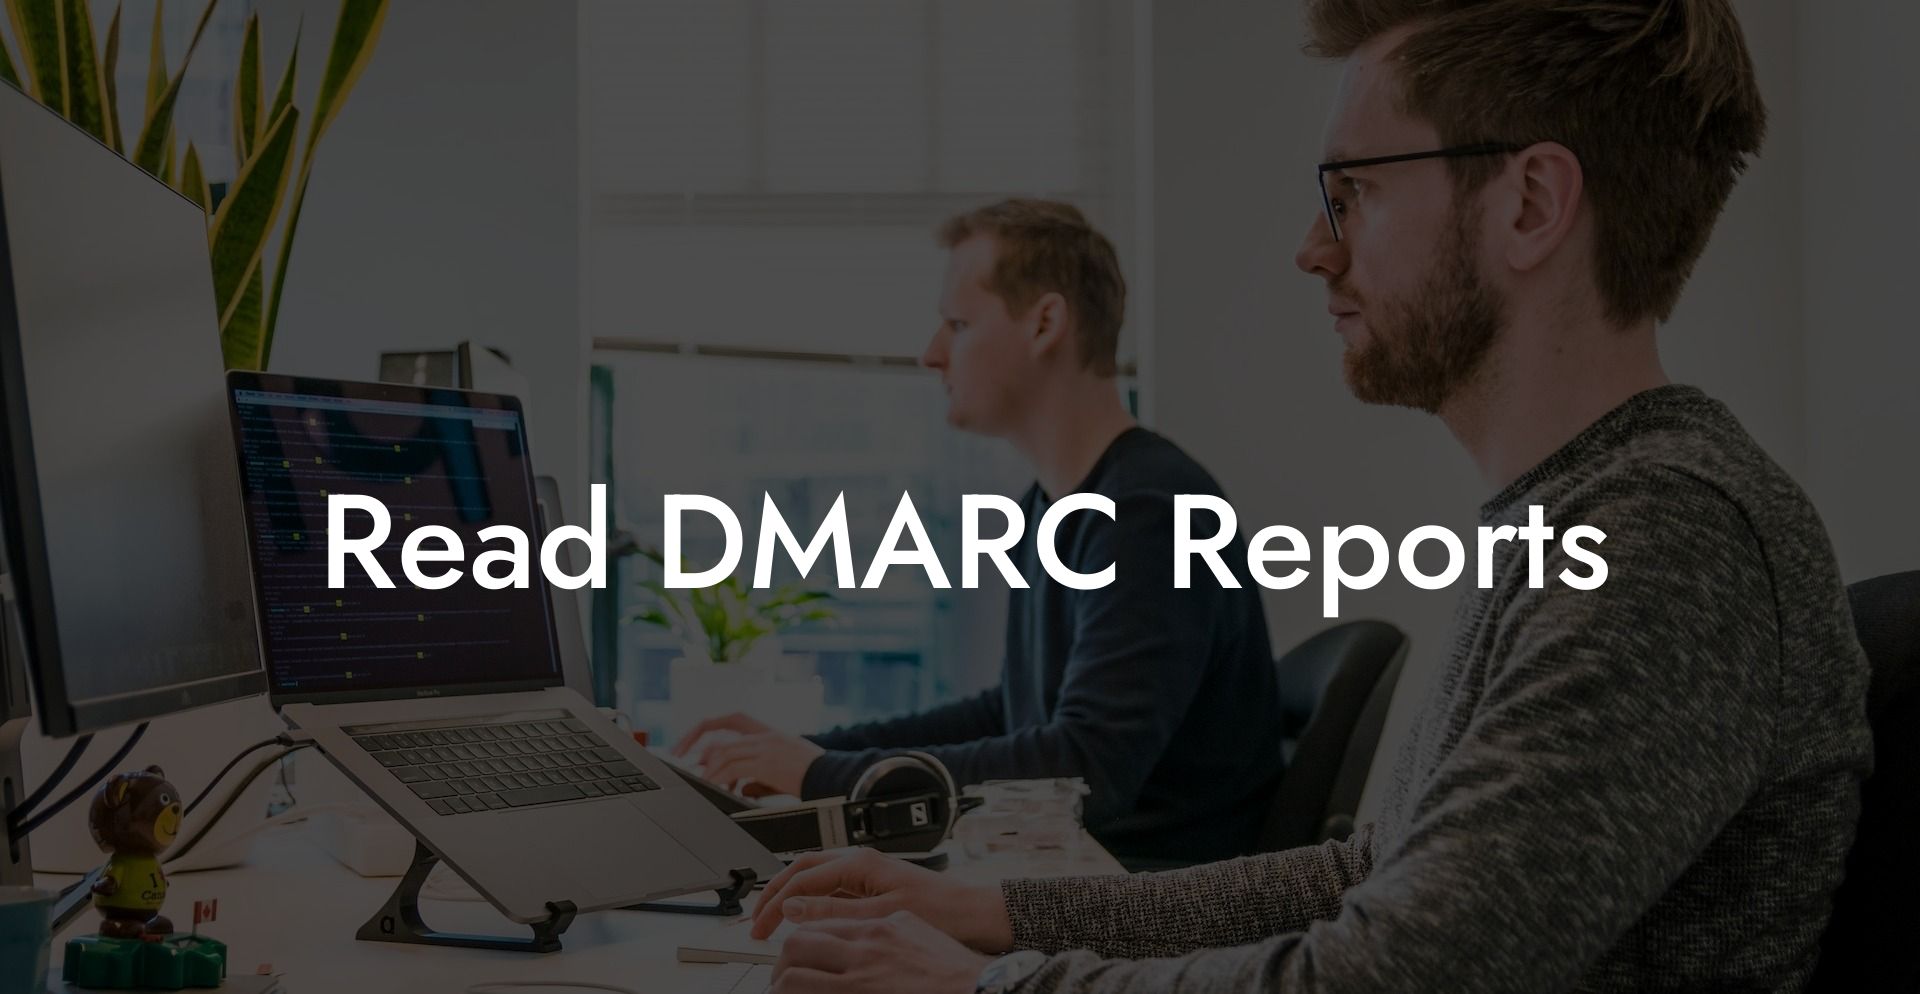 Read DMARC Reports